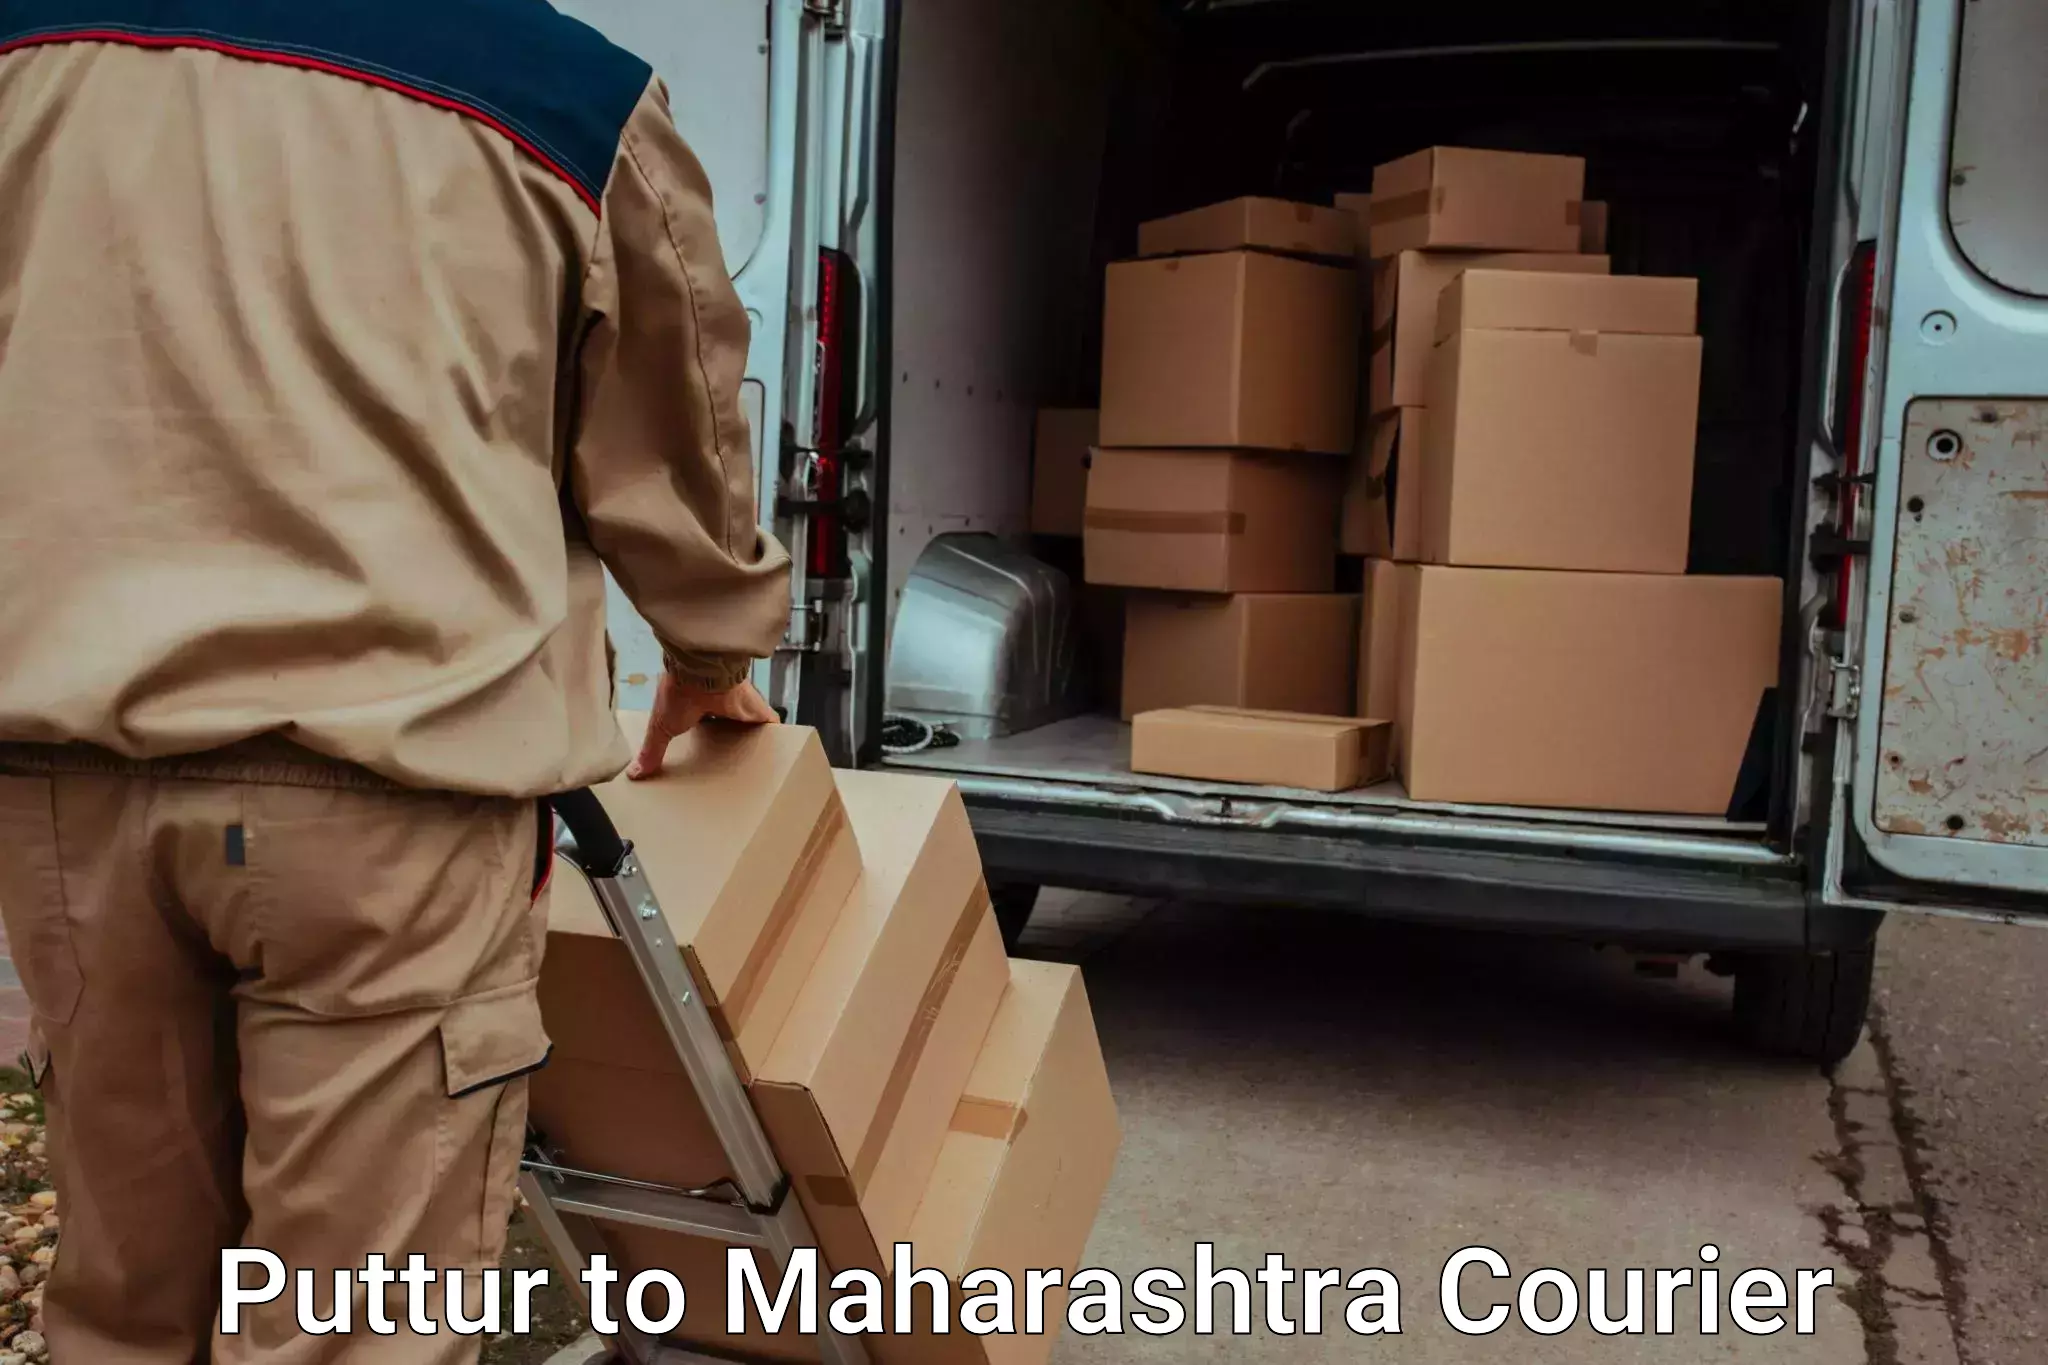 Specialized moving company Puttur to Maharashtra